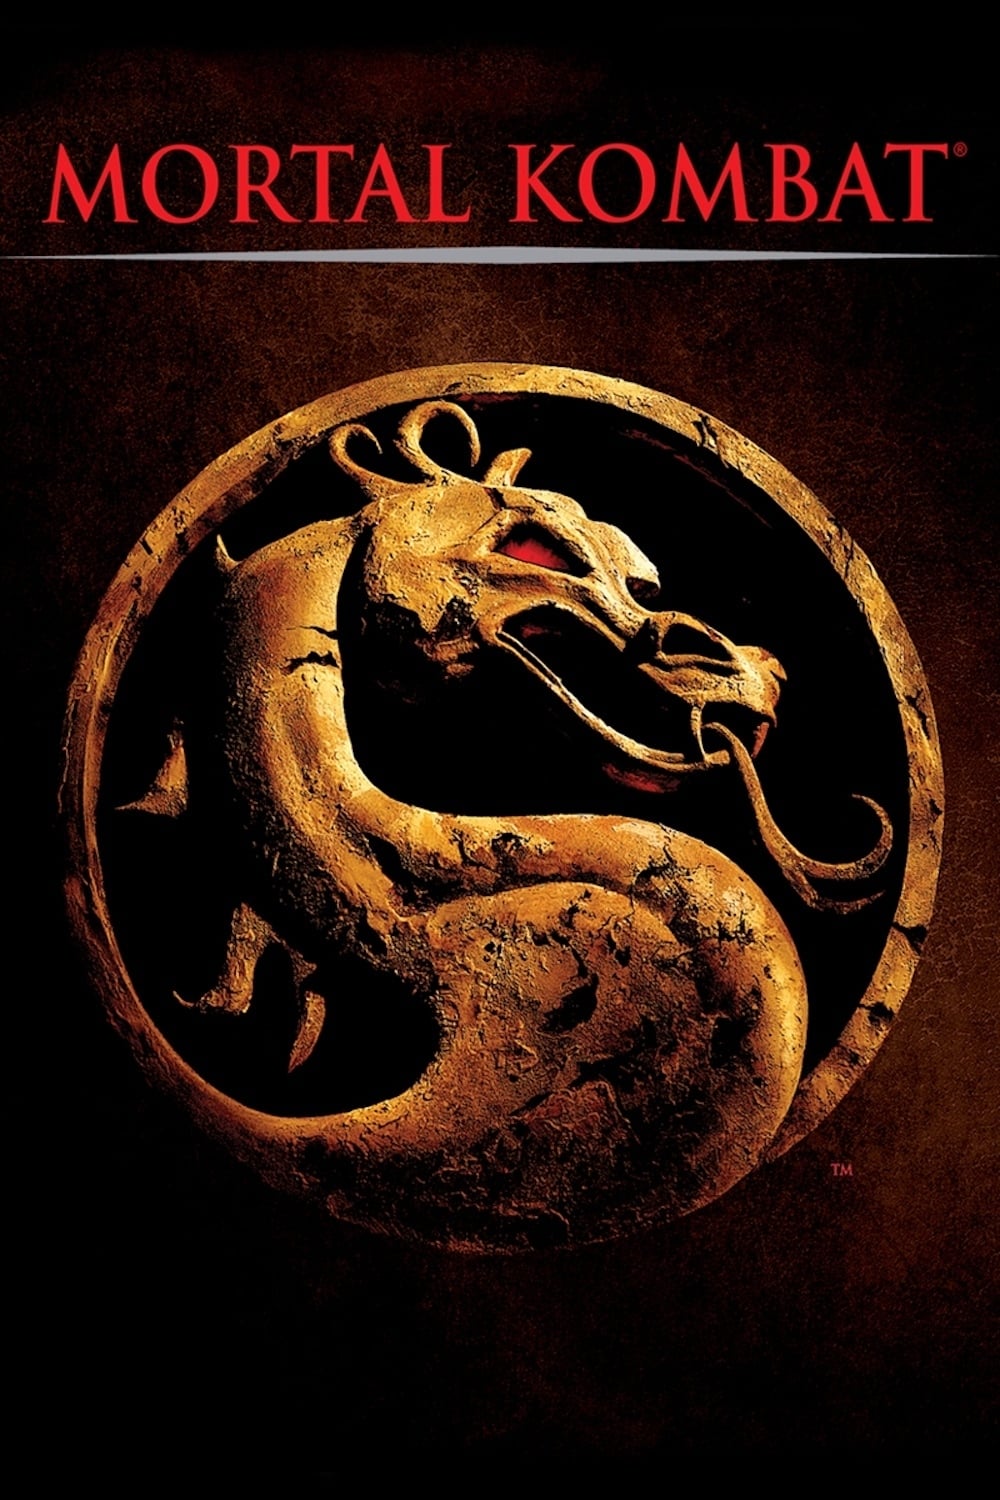 Plakat von "Mortal Kombat"